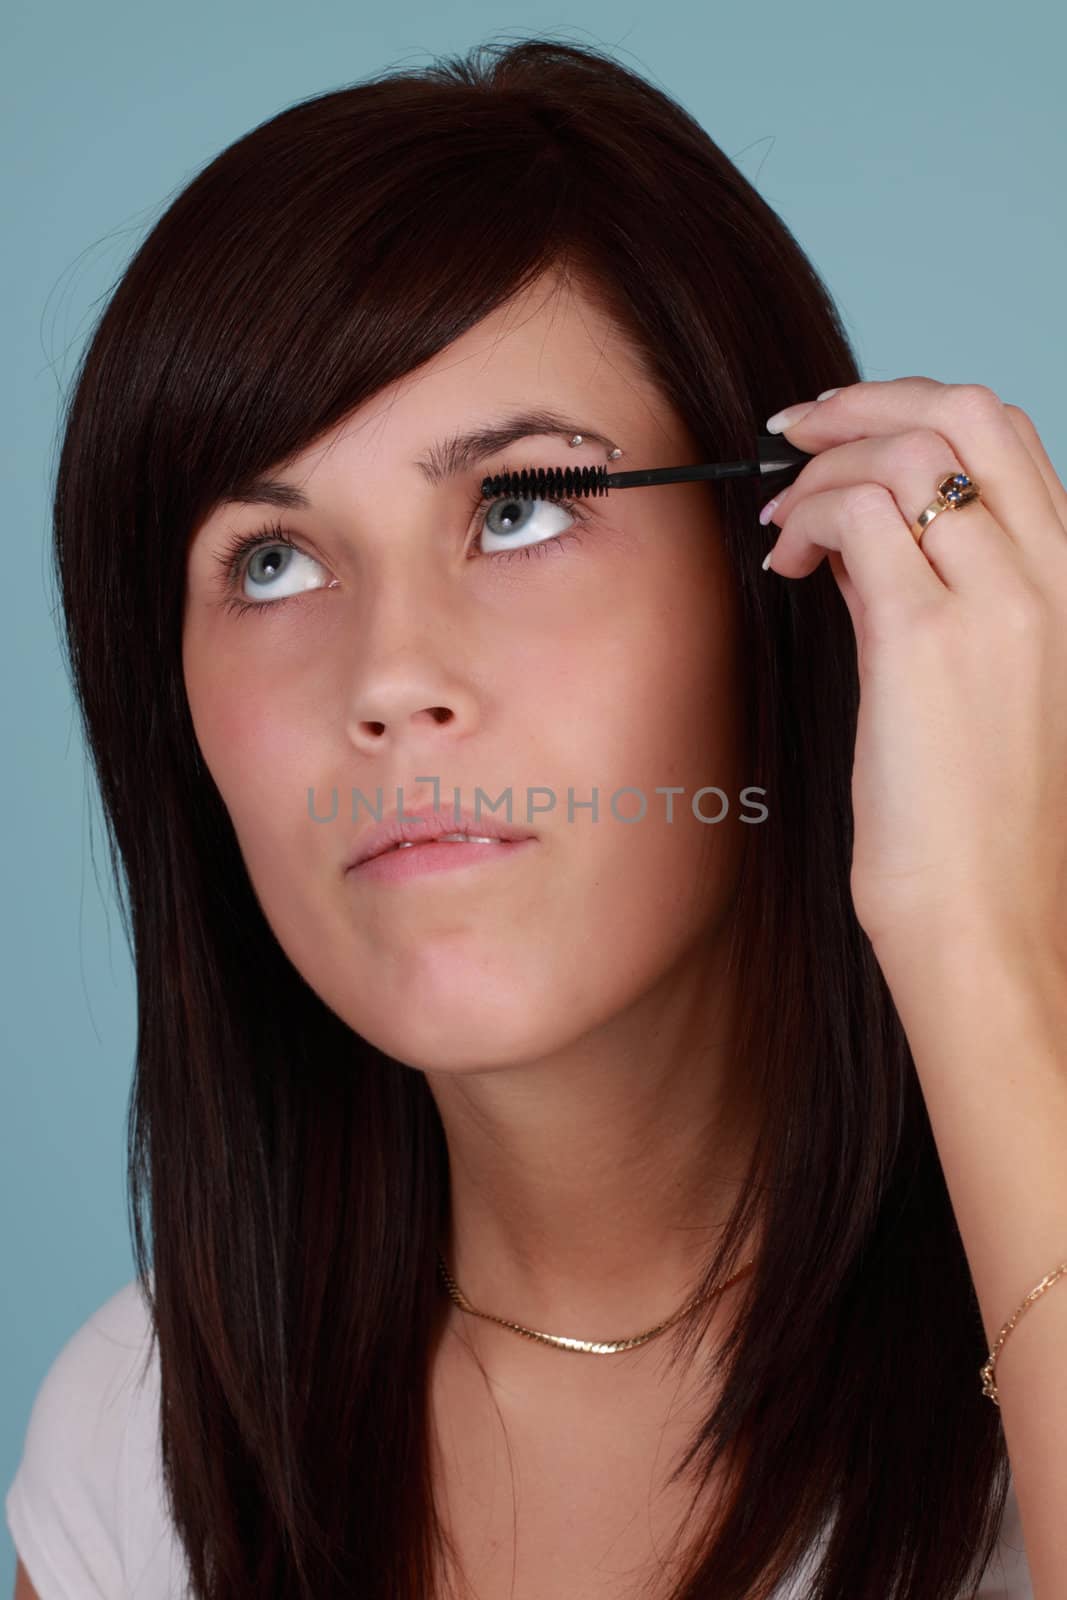 girl applying makeup by lanalanglois